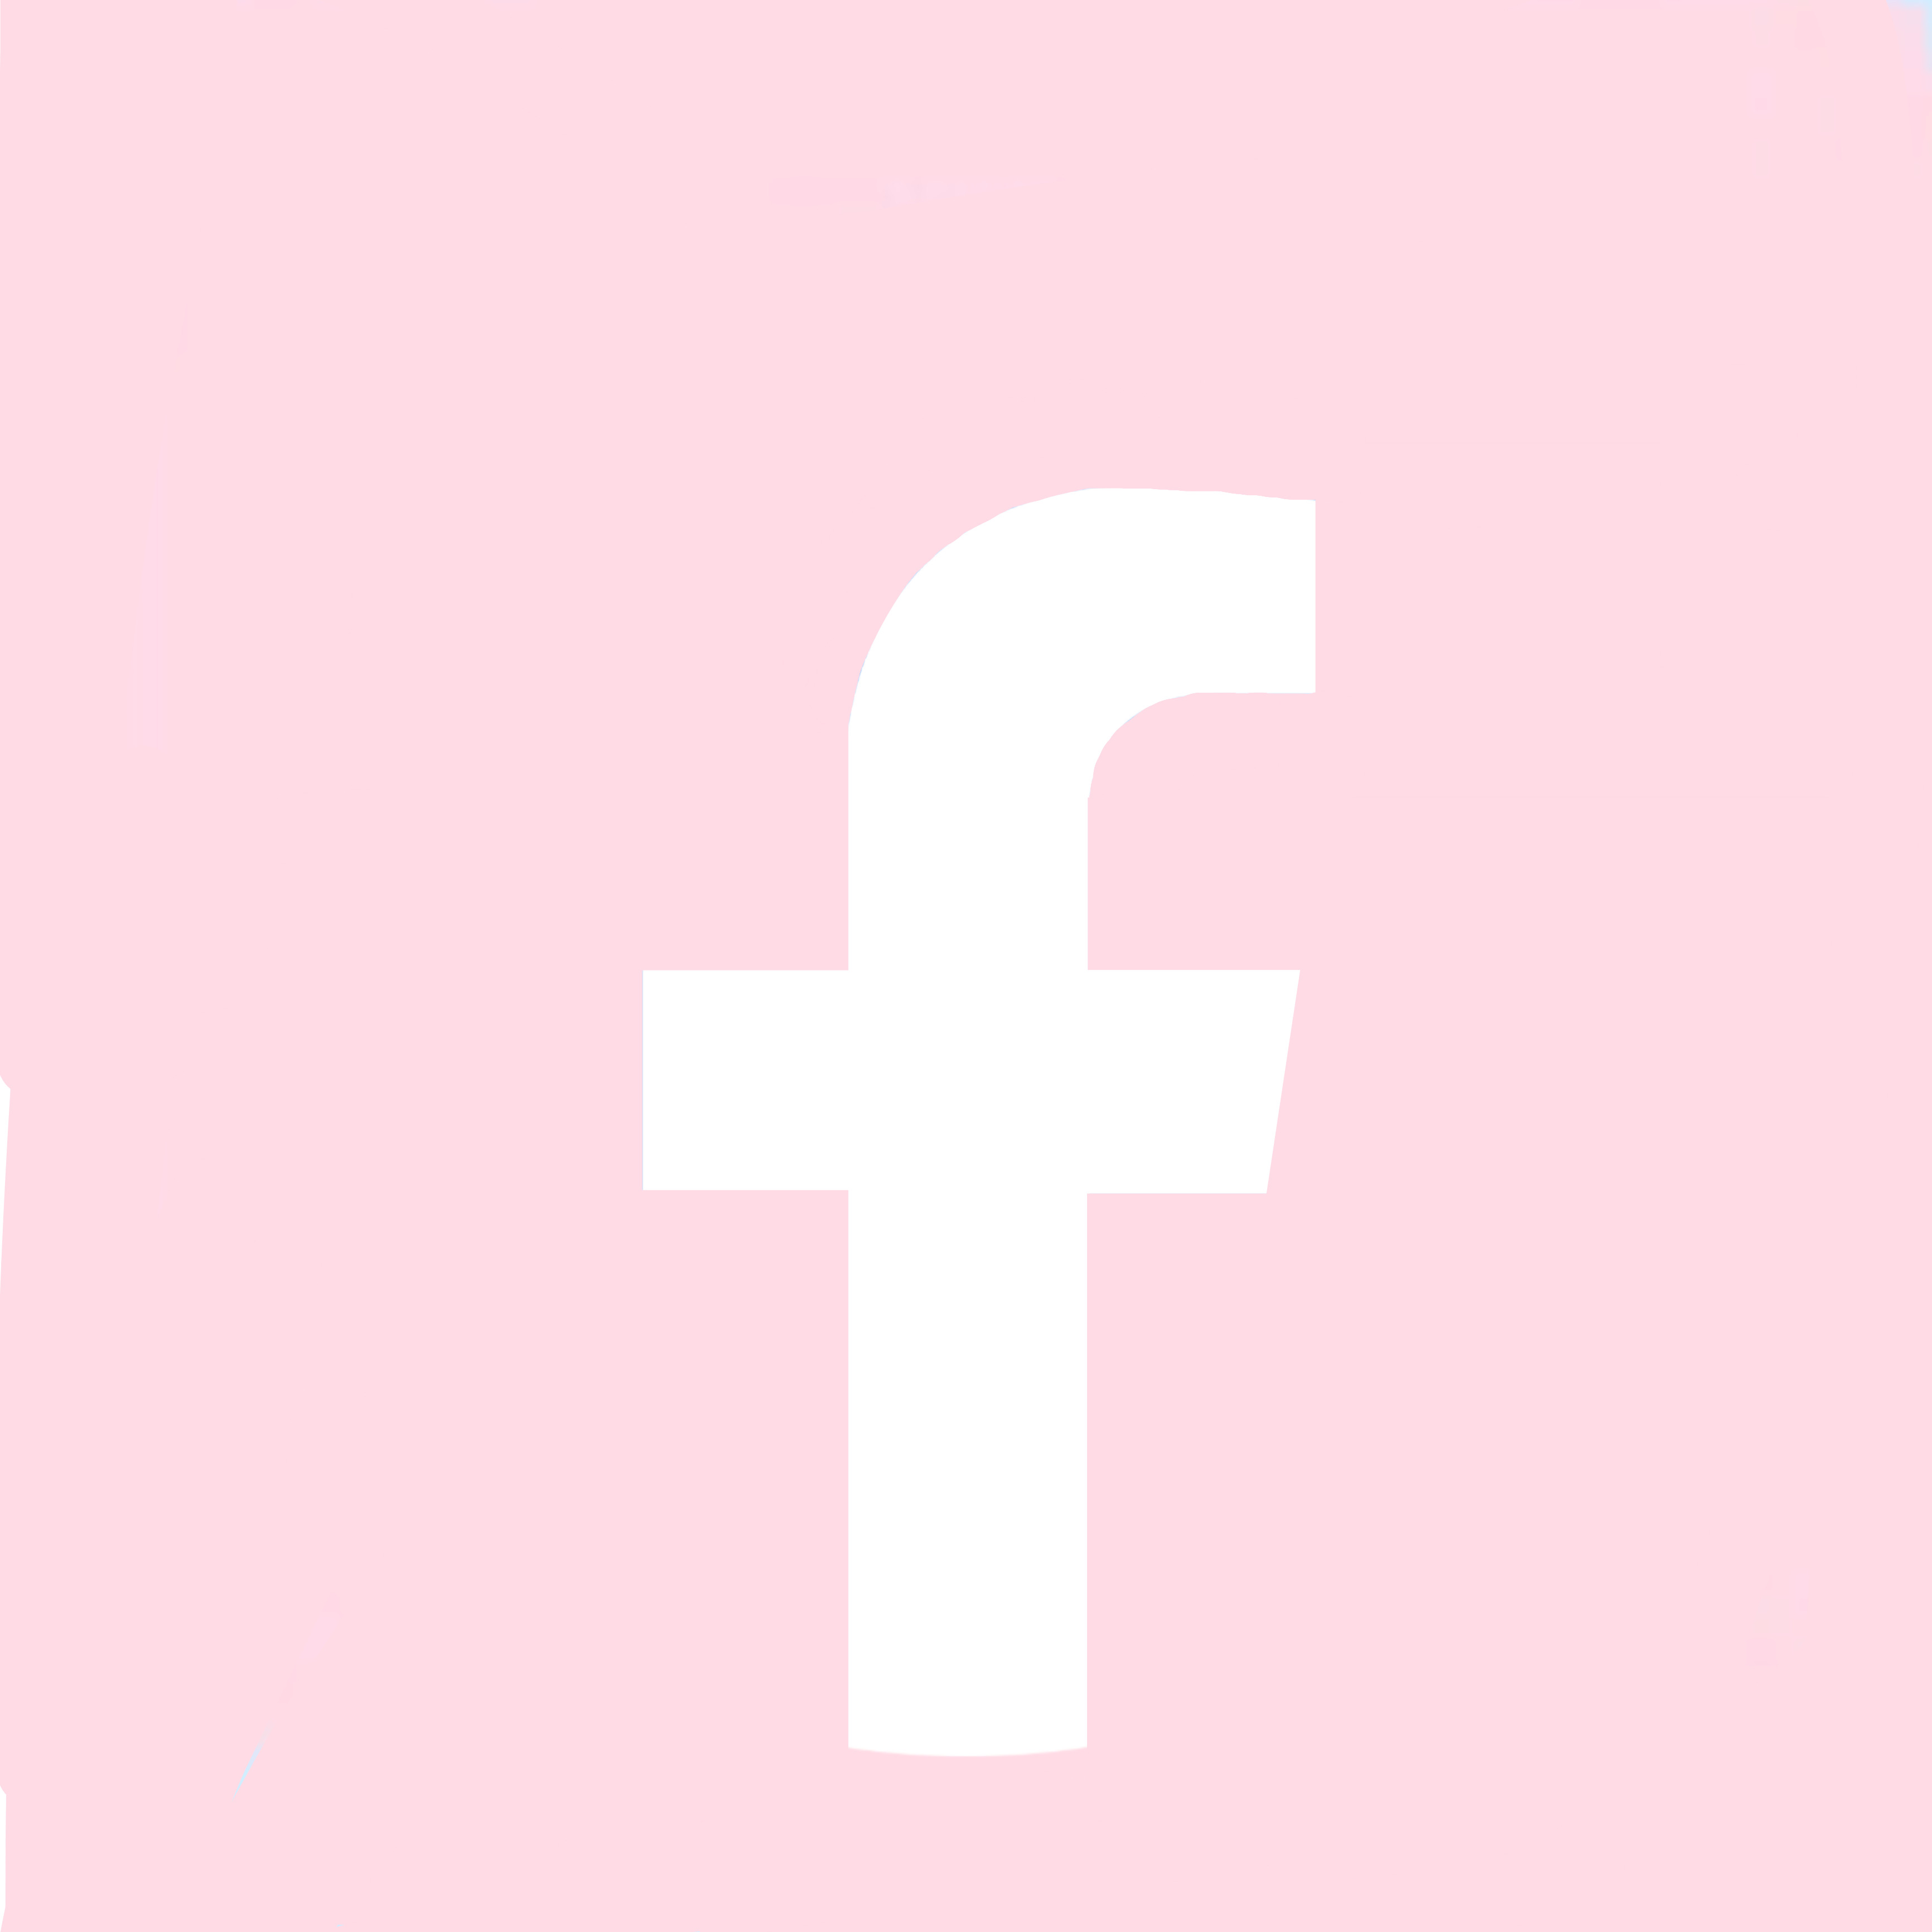 Facebook App Shortcut Pink Aesthetic Image By Pamela